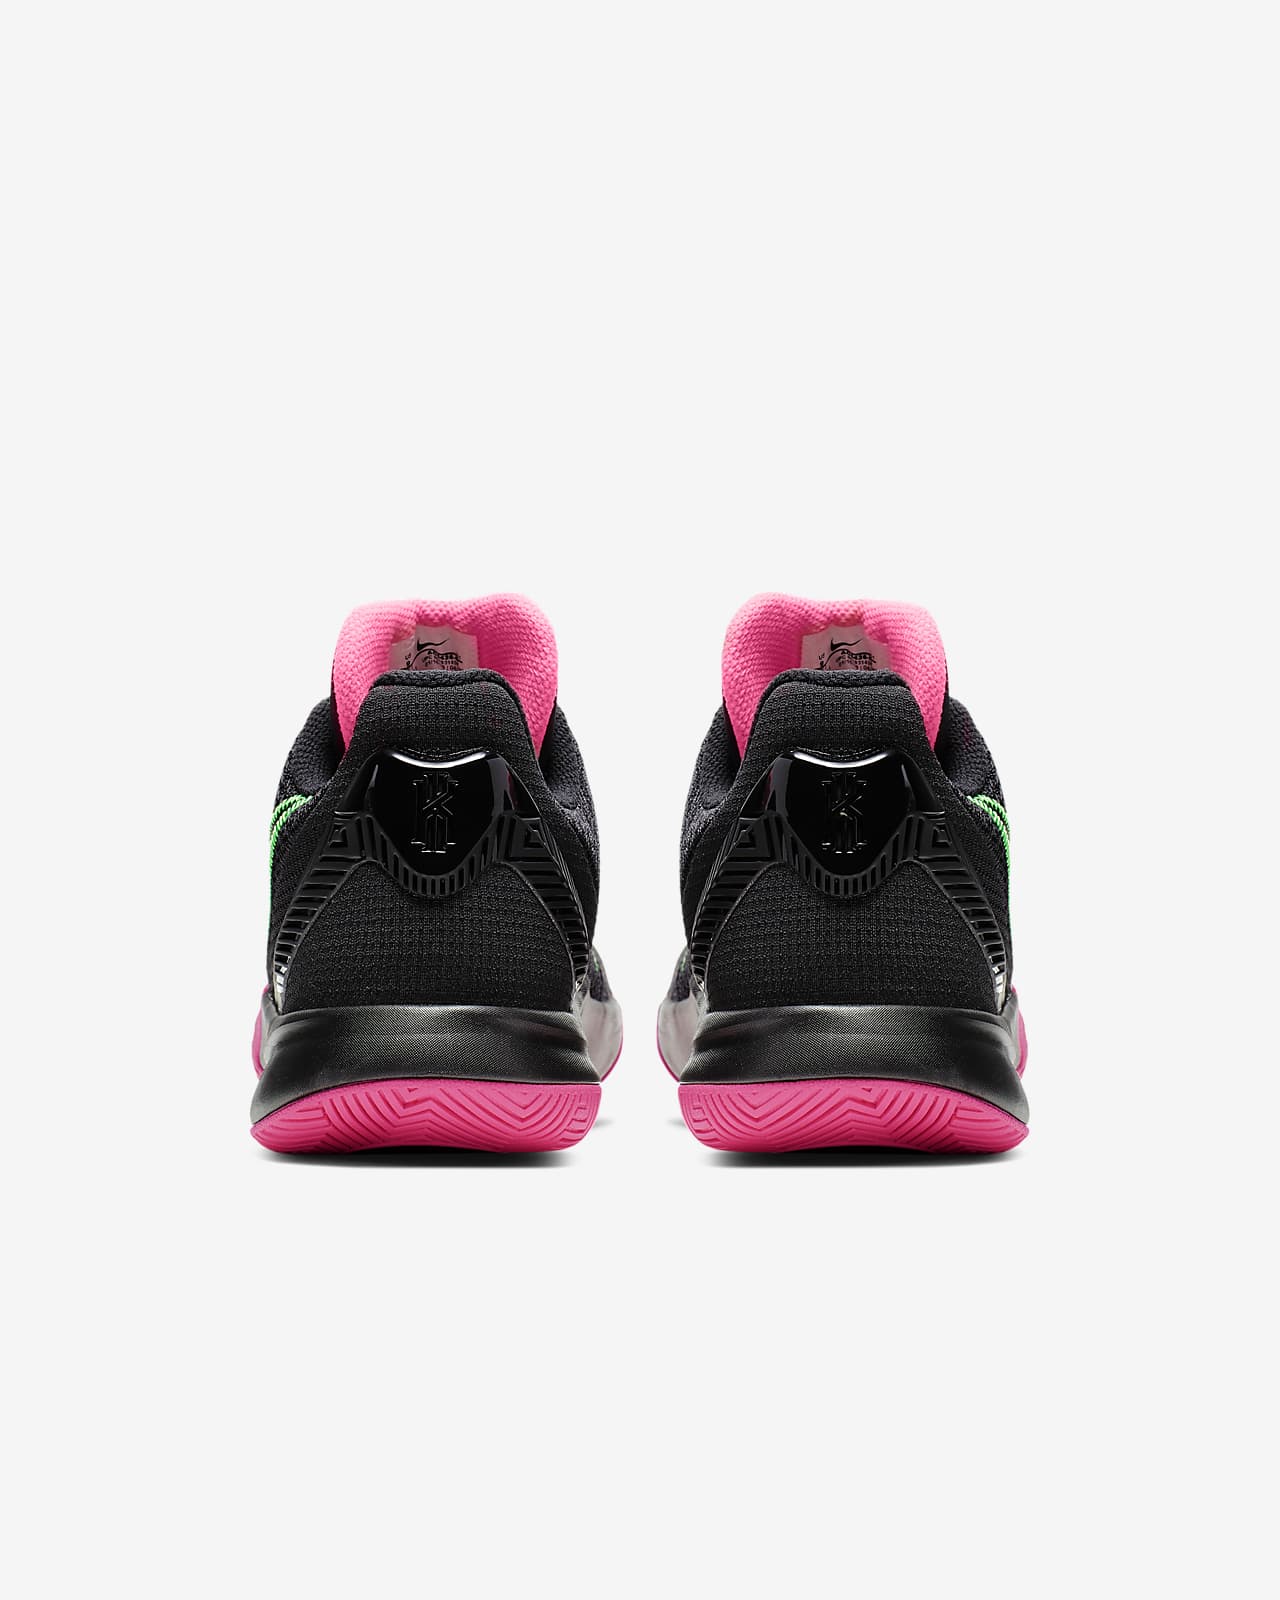 Kyrie Flytrap II Basketball Shoe. Nike.com